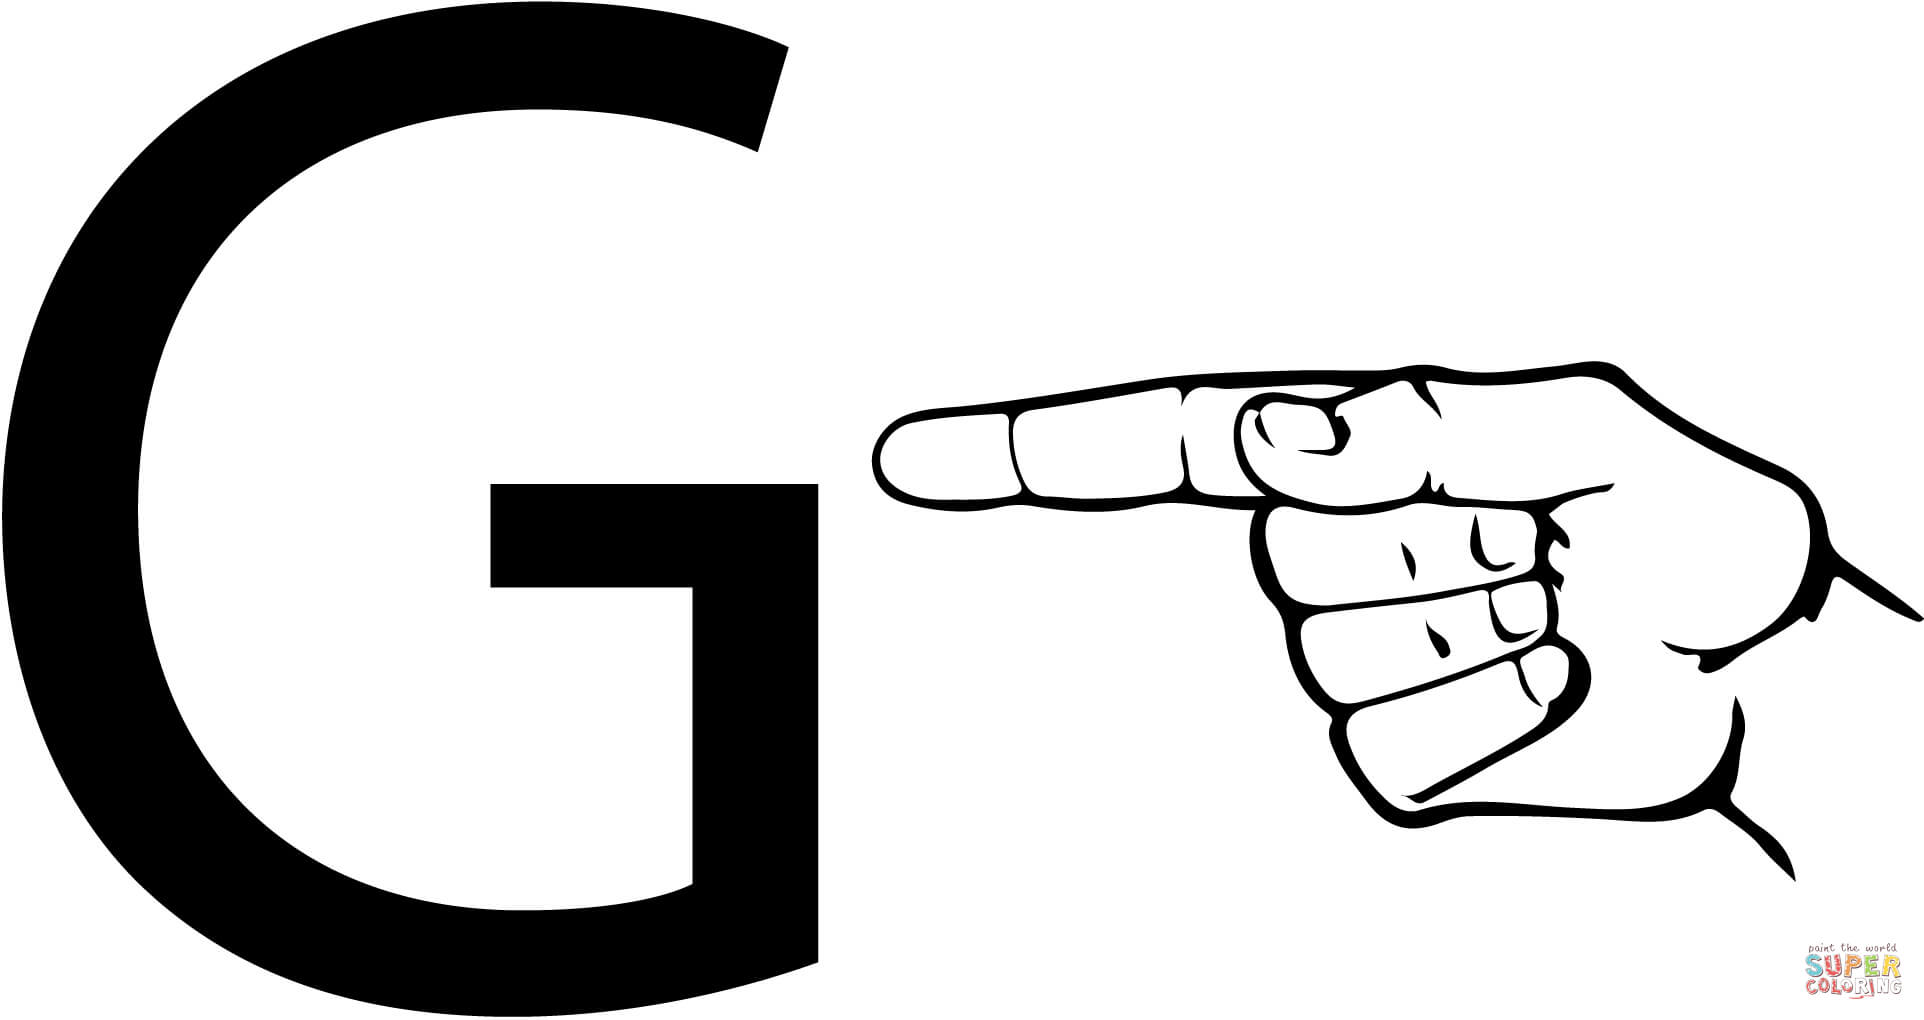 ASL Sign Language Letter G from Letter G